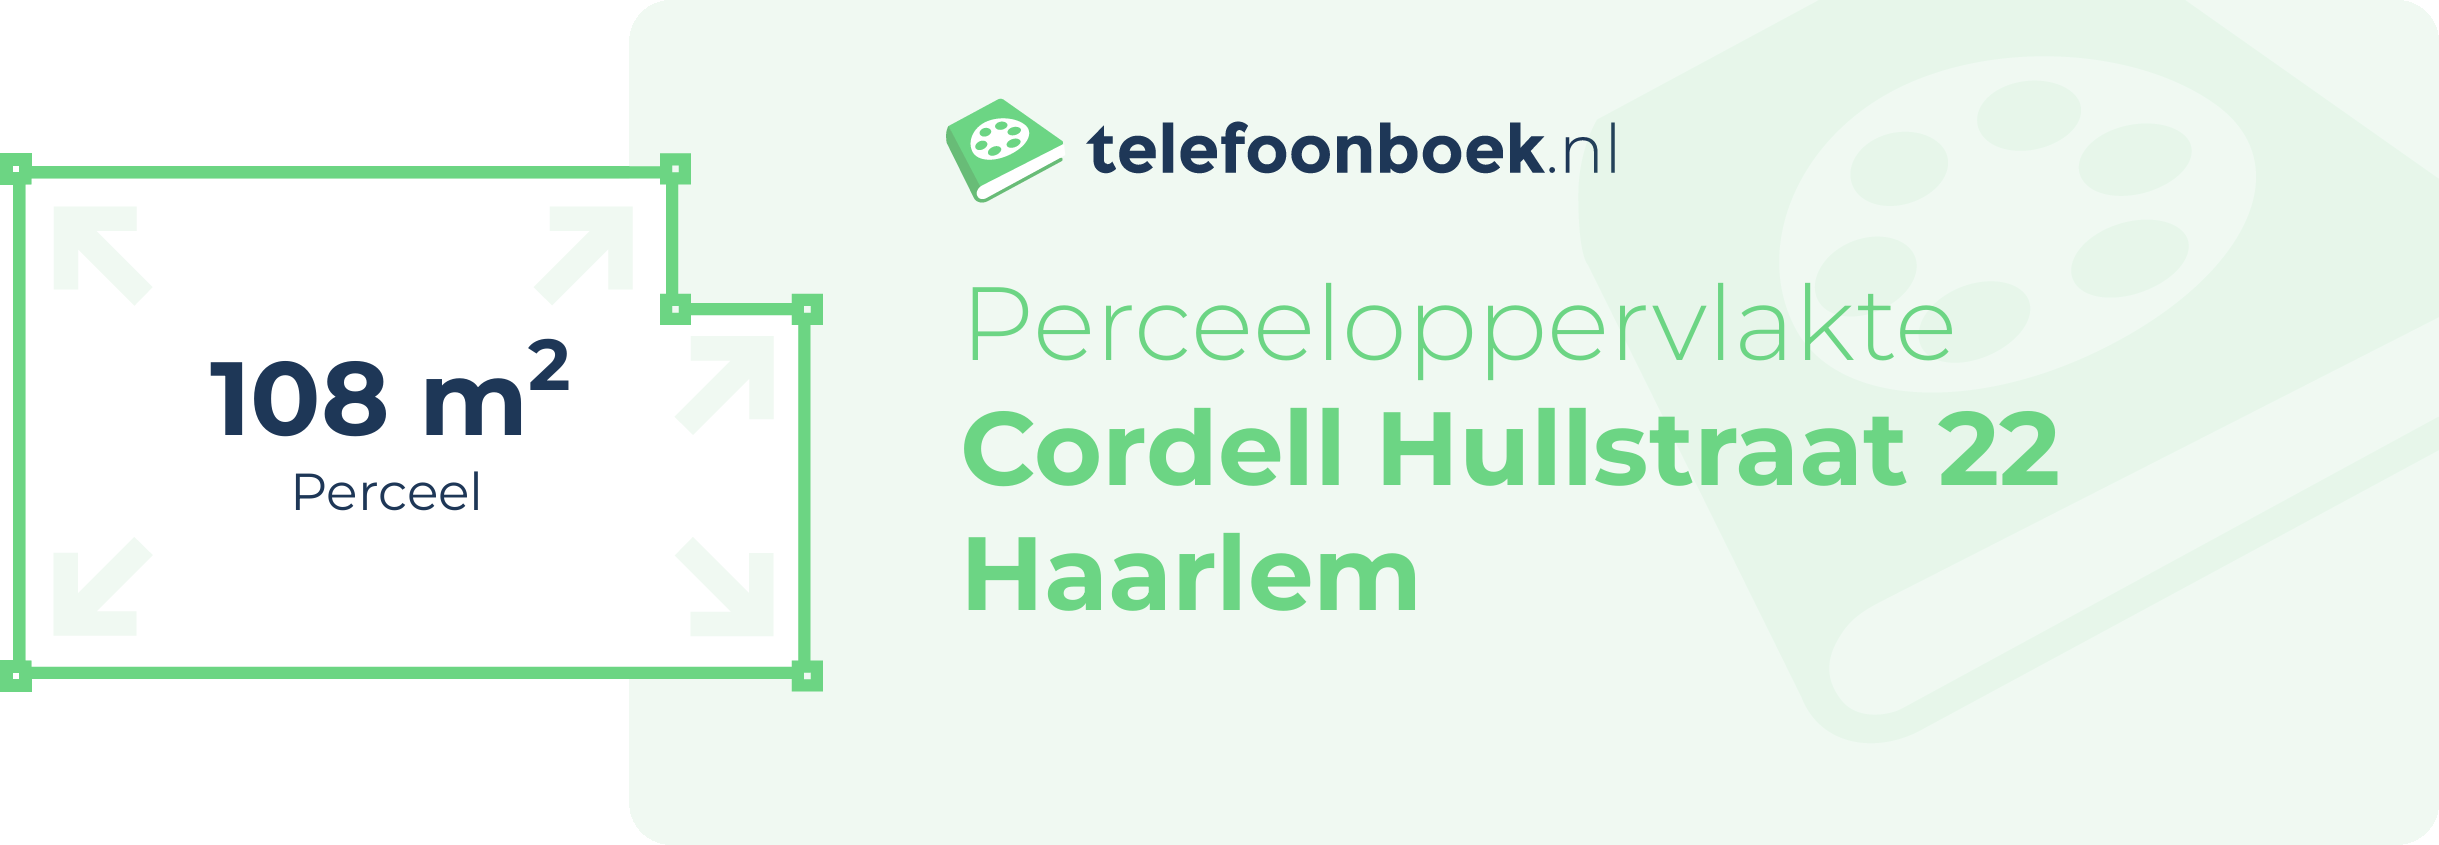 Perceeloppervlakte Cordell Hullstraat 22 Haarlem